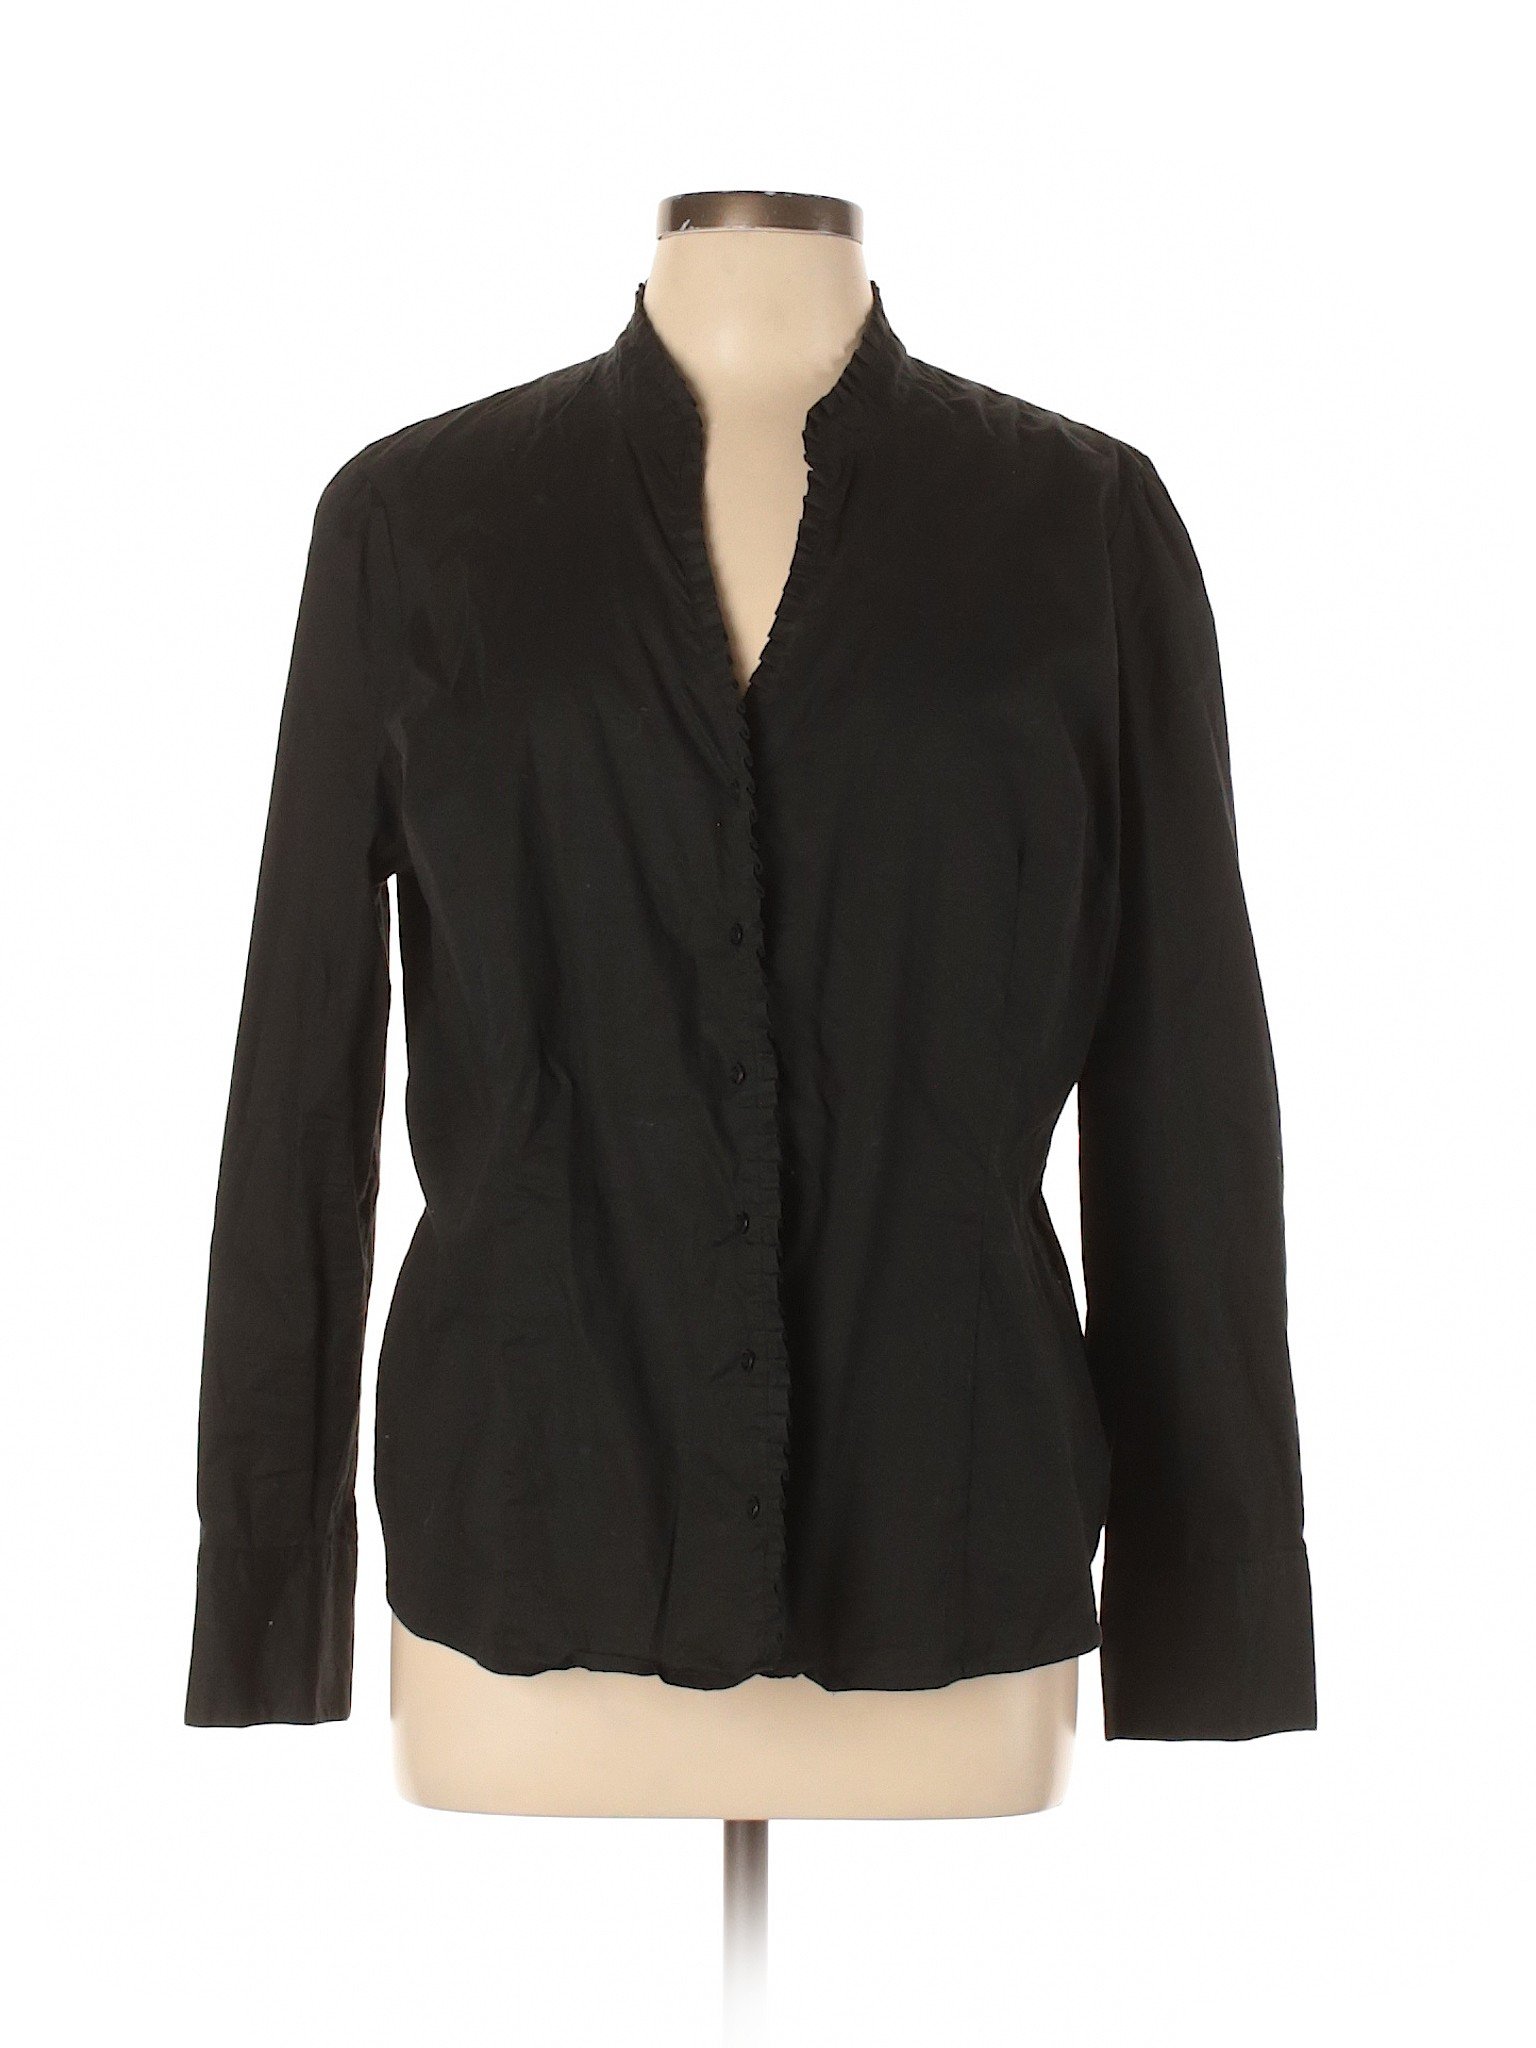 St. John's Bay Solid Black Long Sleeve Blouse Size XL - 83% off | thredUP